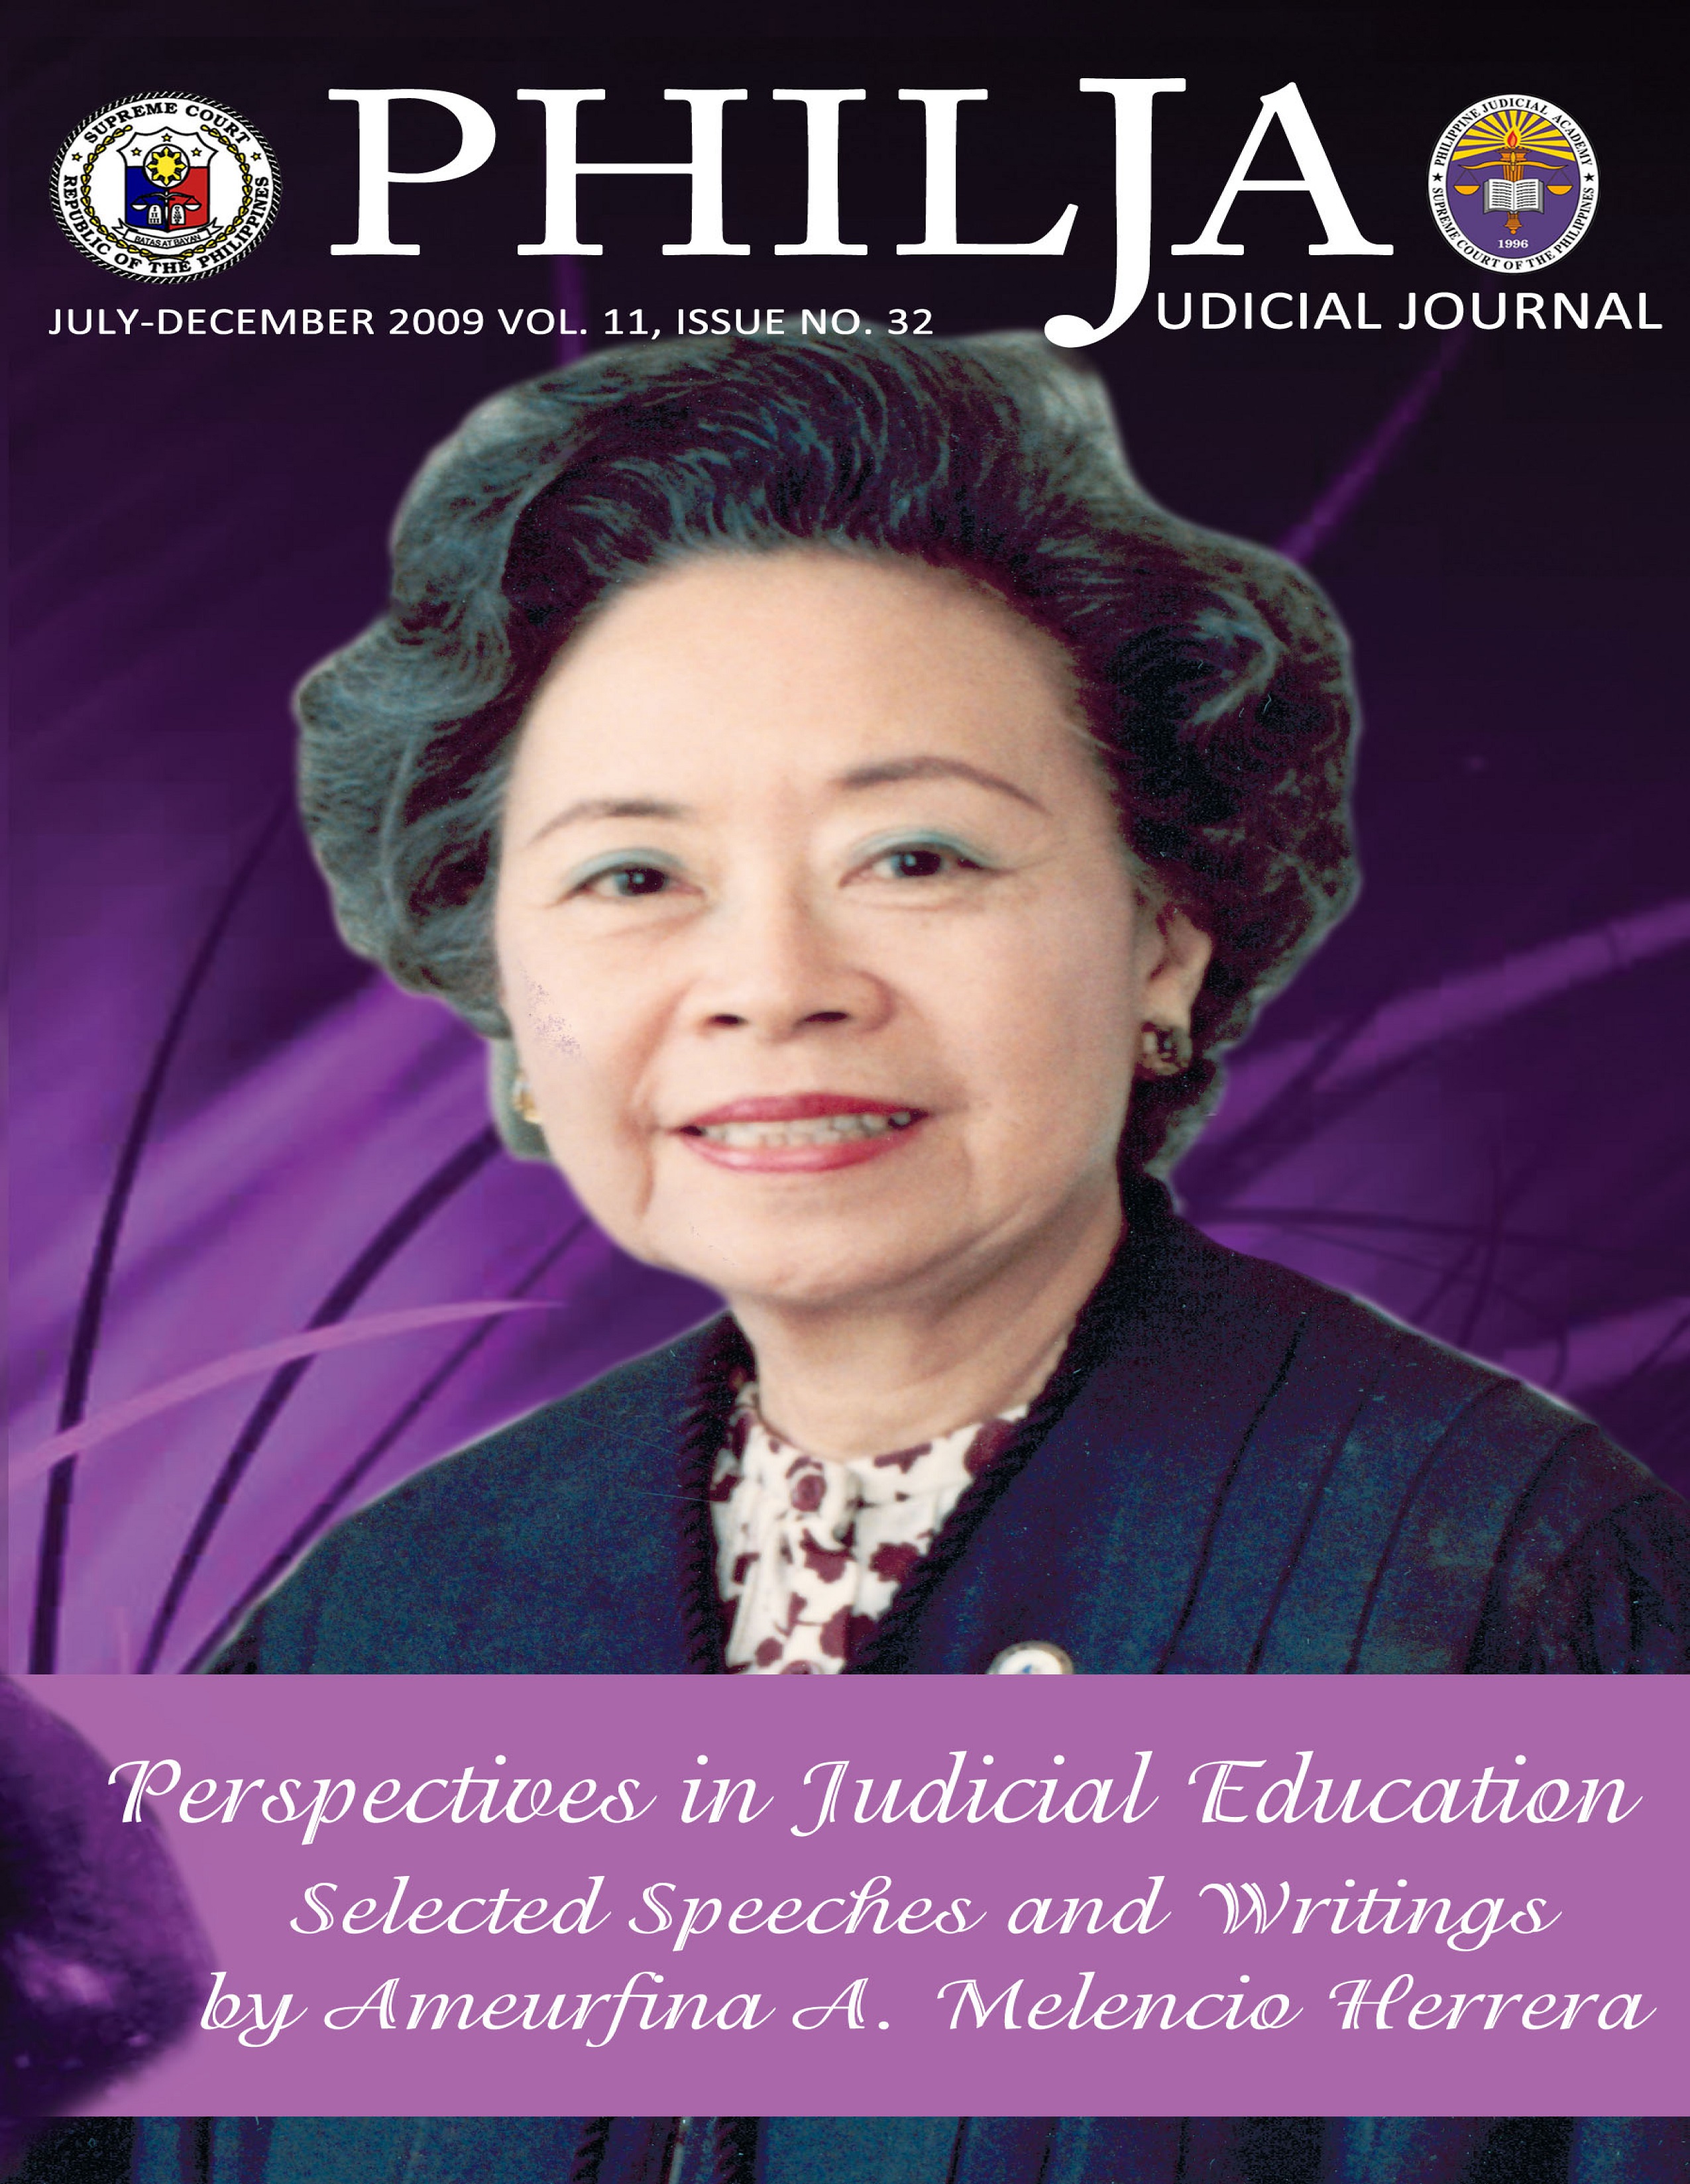 PJJ Vol. 11, Issue 32 